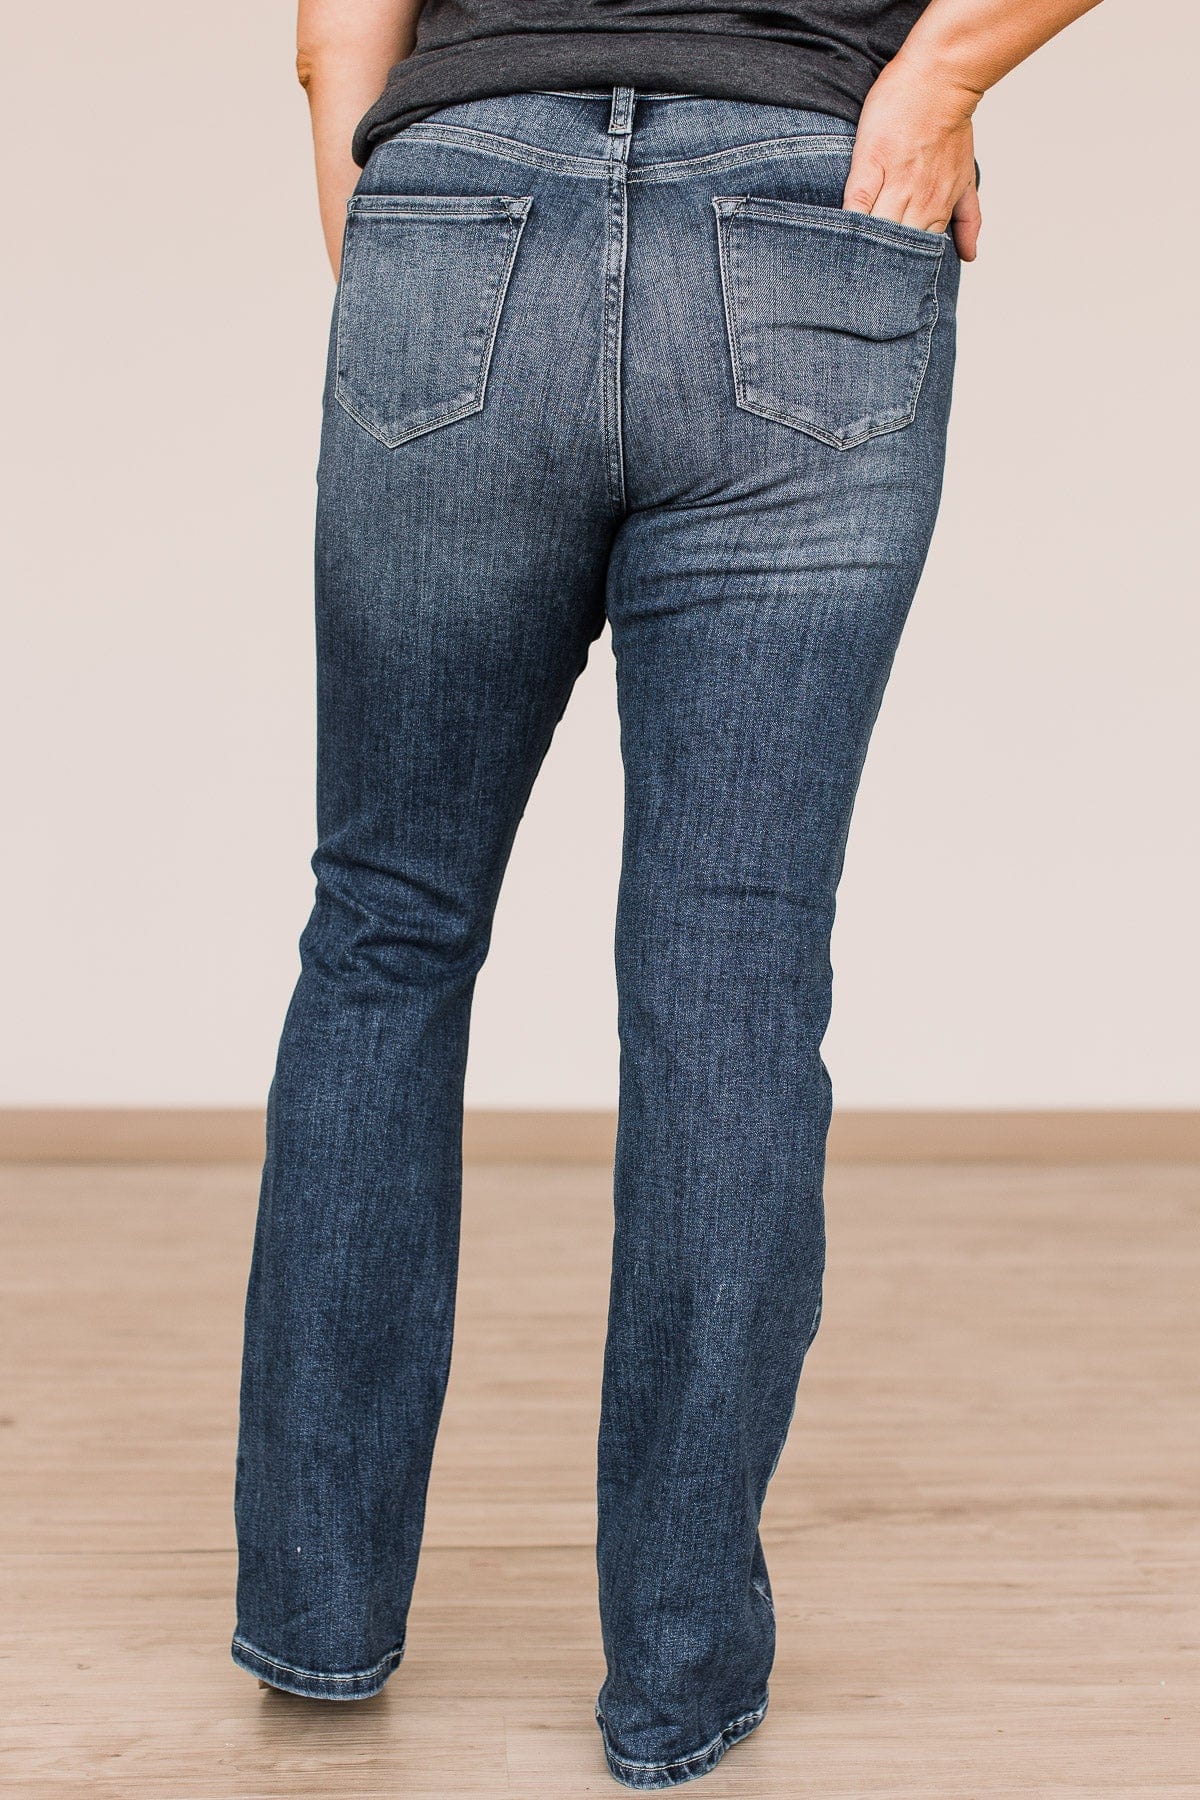 KanCan Skinny Bootcut Jeans- Lauren Wash